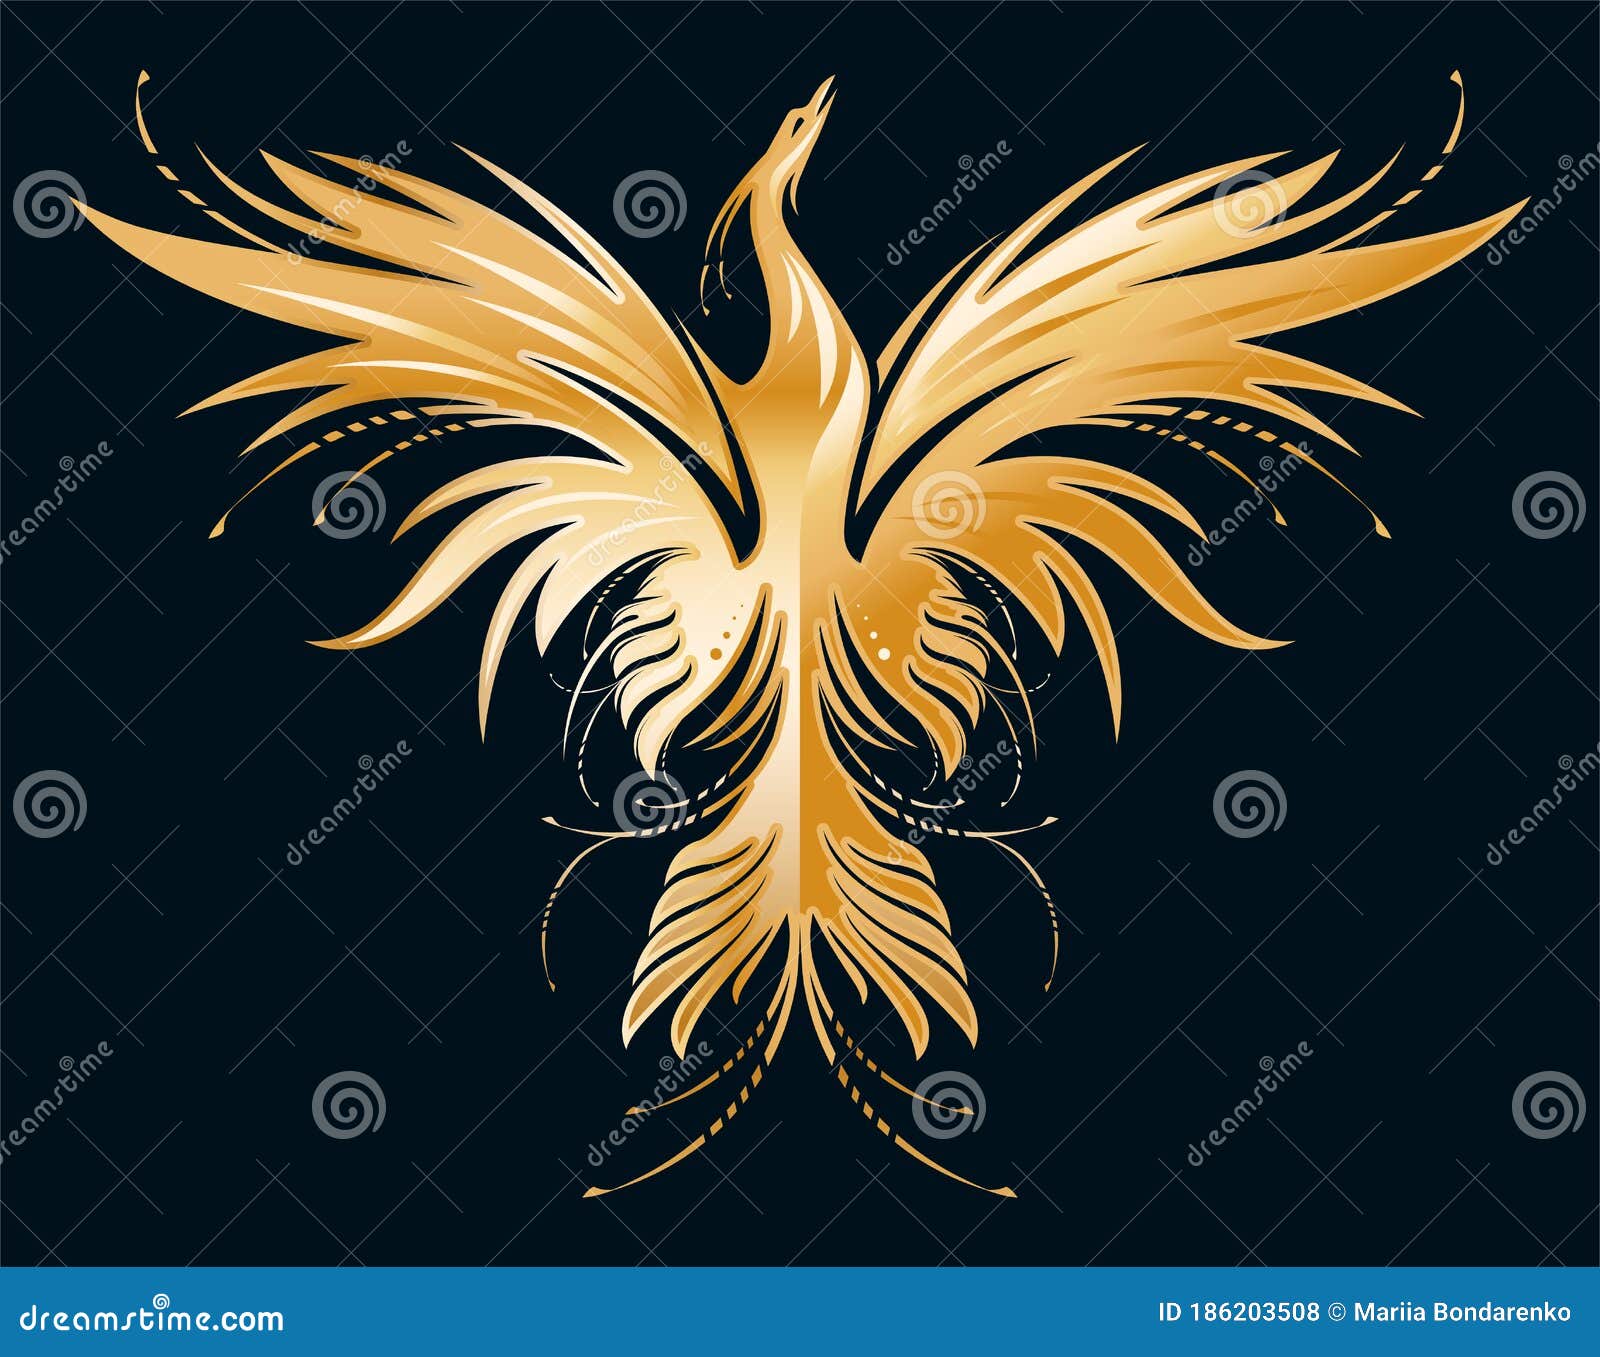 Golden Phoenix Stock Illustrations 656 Golden Phoenix Stock Illustrations Vectors Clipart Dreamstime